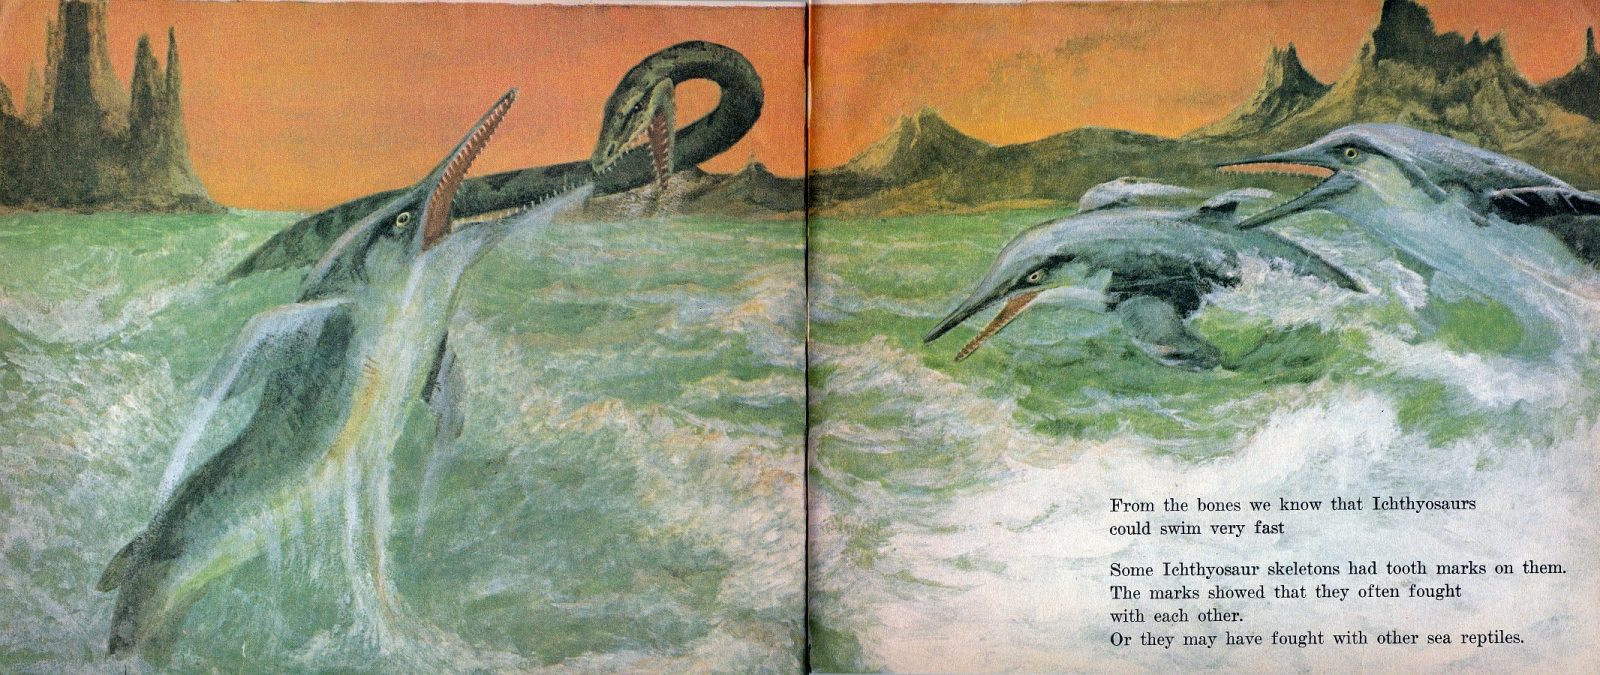 Plesiosaur v ichthyosaurs by John Hamberger